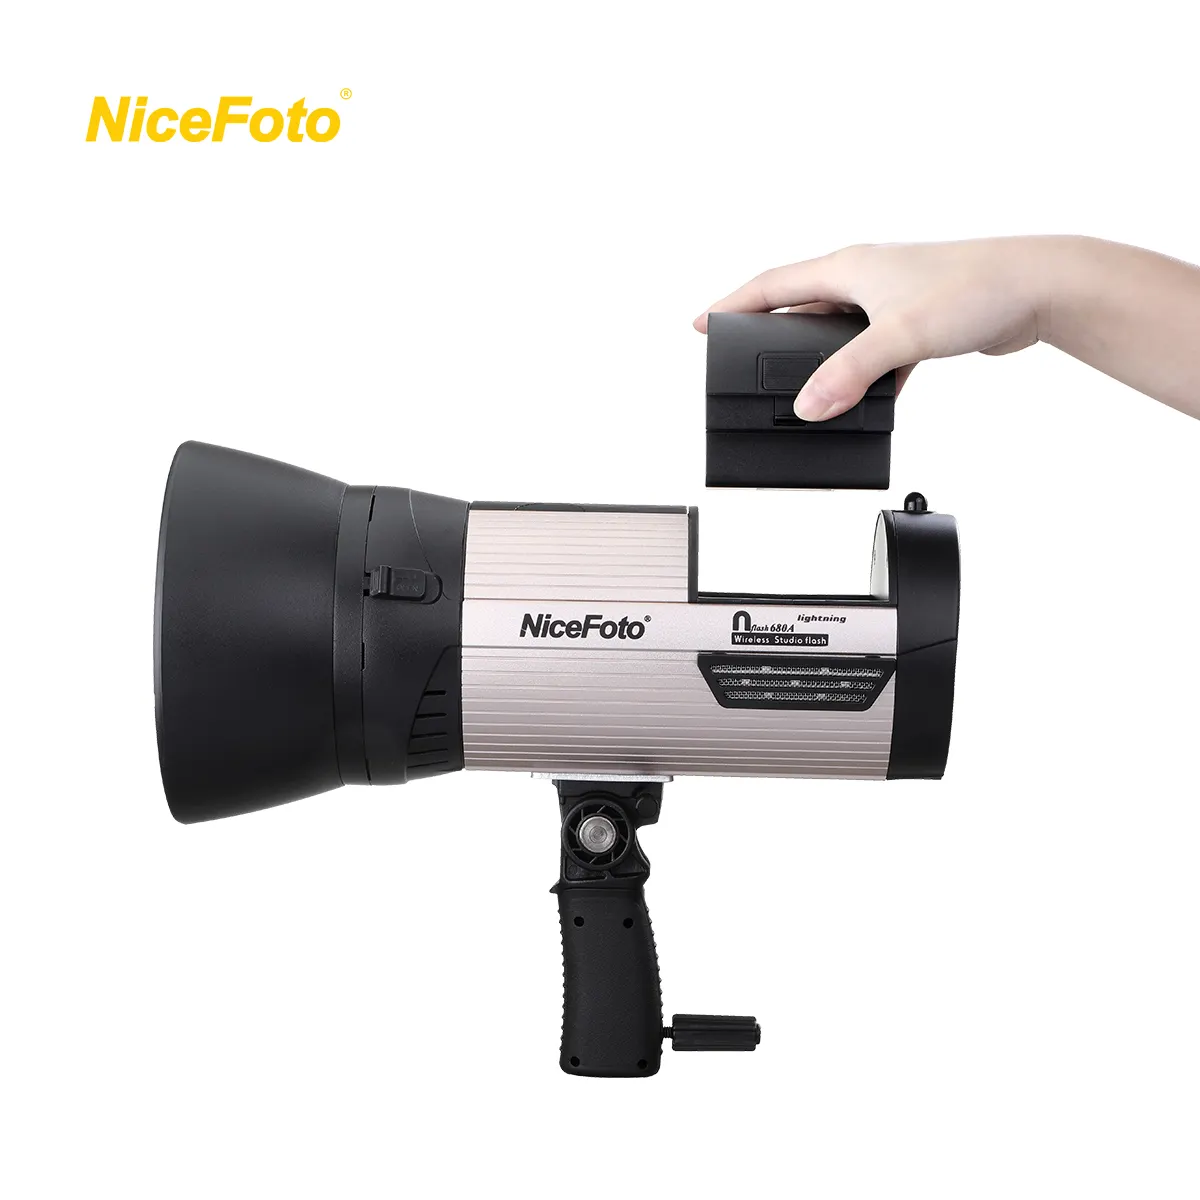 Nicefoto 680A 680W Battery Powered Professional Bowens Outdoor Photography Photo Strobe Studio Camera Flash Light